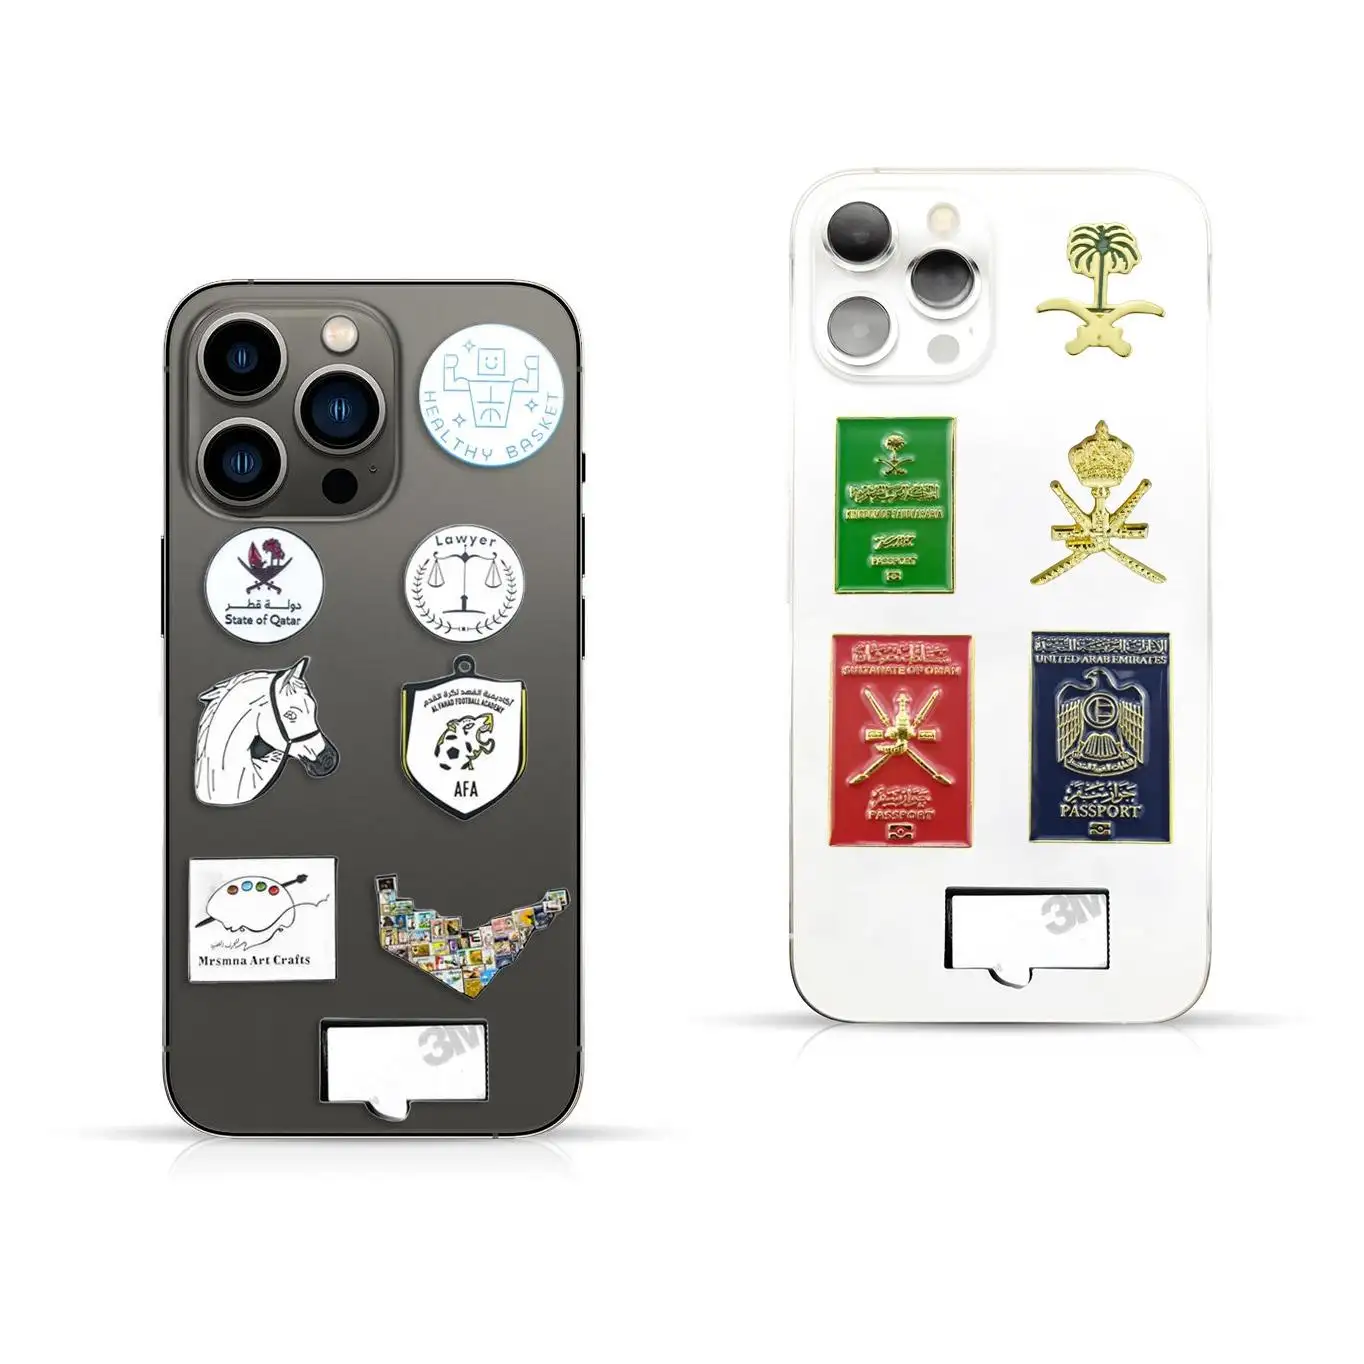 Oman Mobile Phone Sticker Supplier enamel lapel pin Metal Logo Stick Pin with 3M Glue